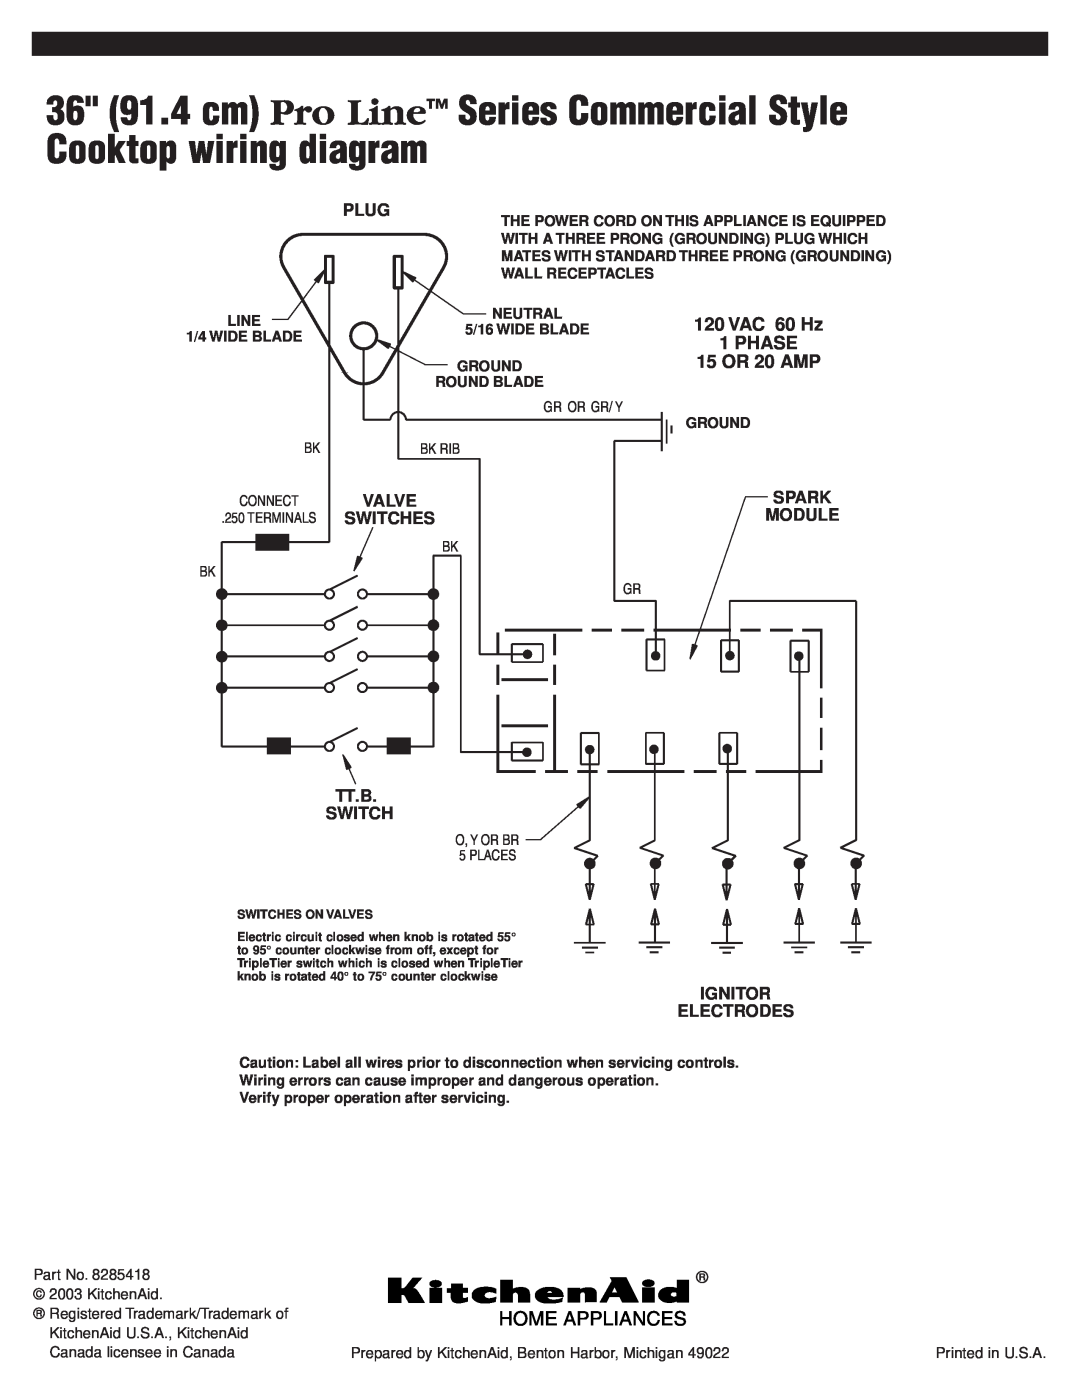 KitchenAid 8285418 36 91.4 cm Pro Line Series Commercial Style Cooktop wiring diagram, VAC 60 Hz, Phase, Valve, Spark 